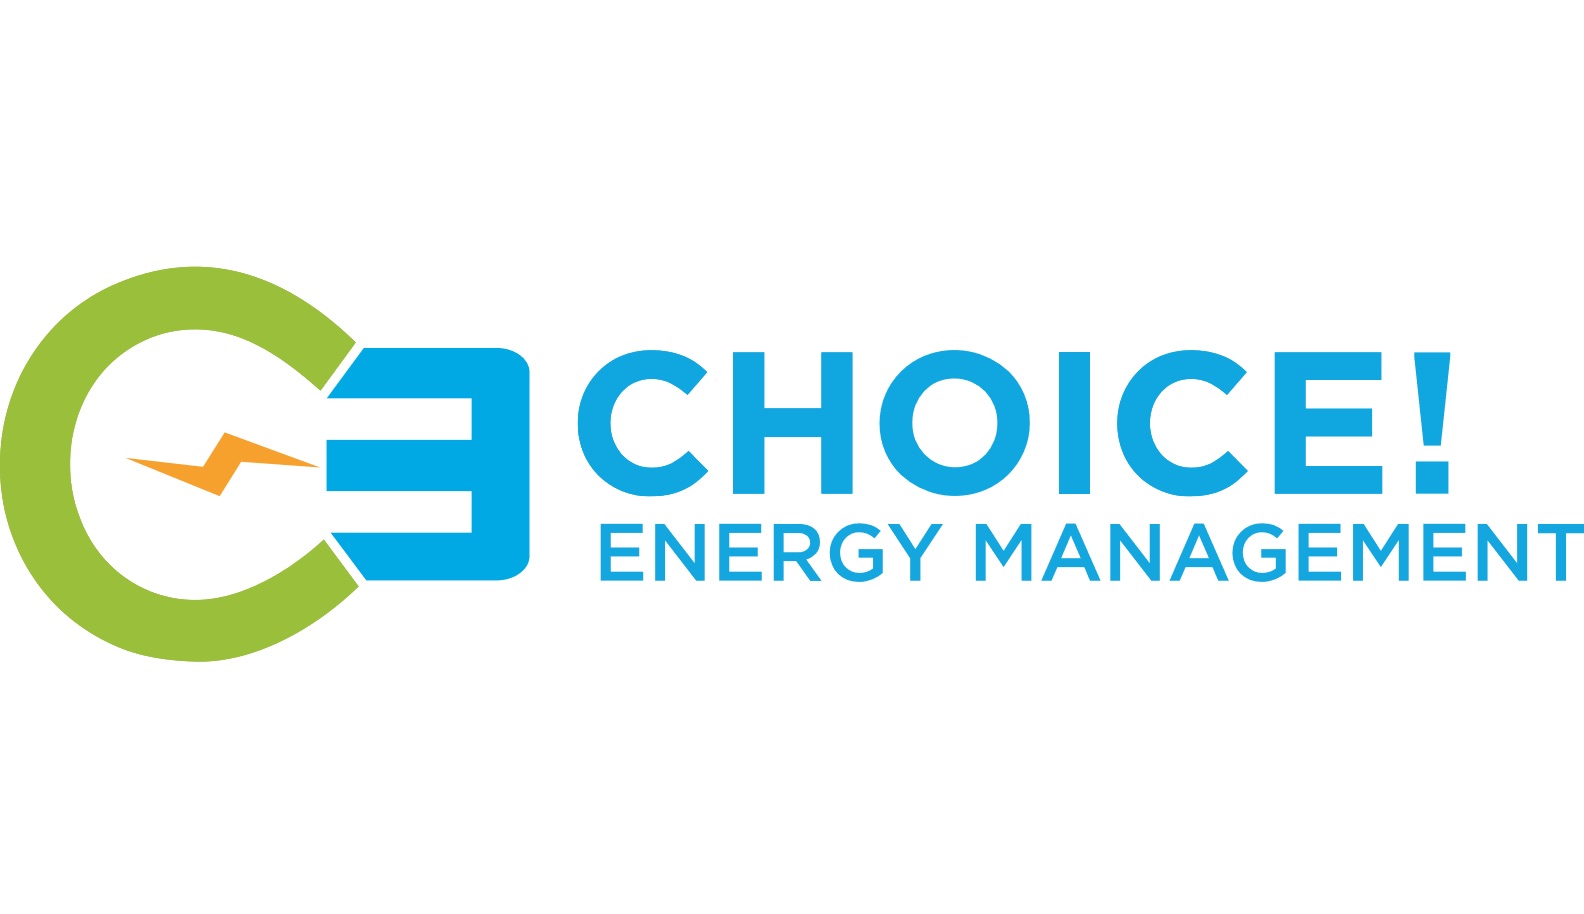 Choice! Energy Management